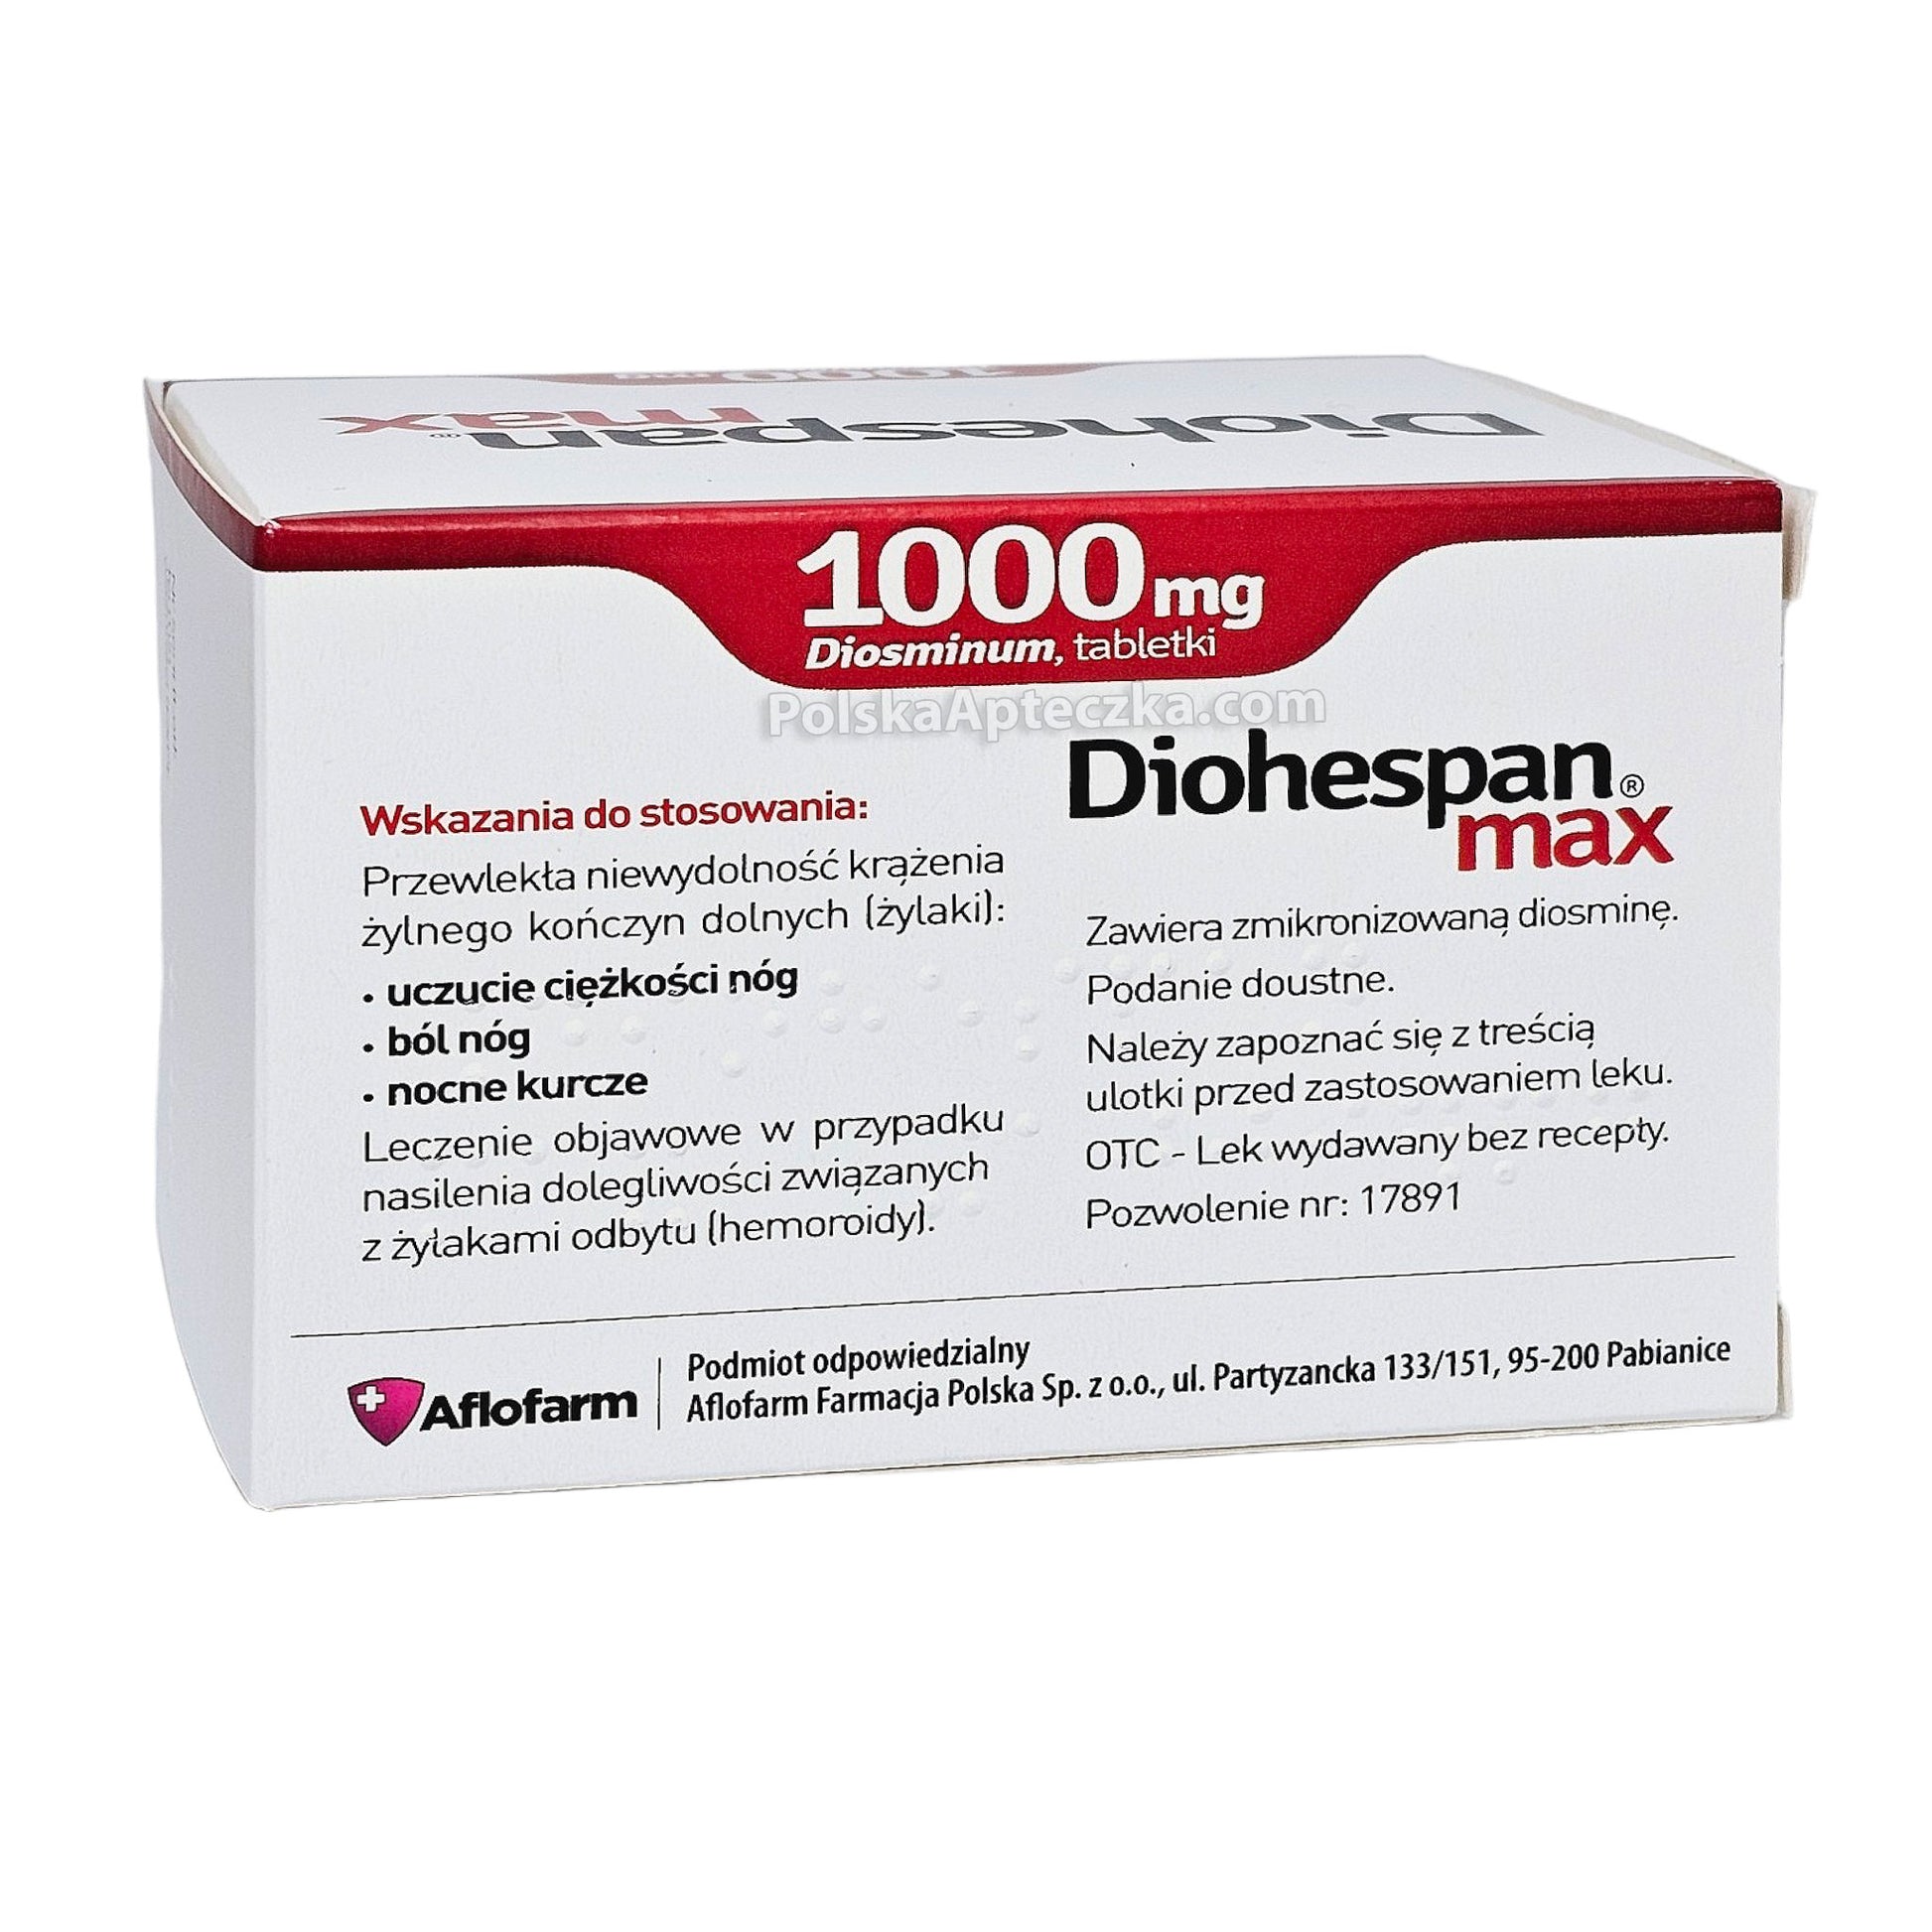 diohespan max tablets